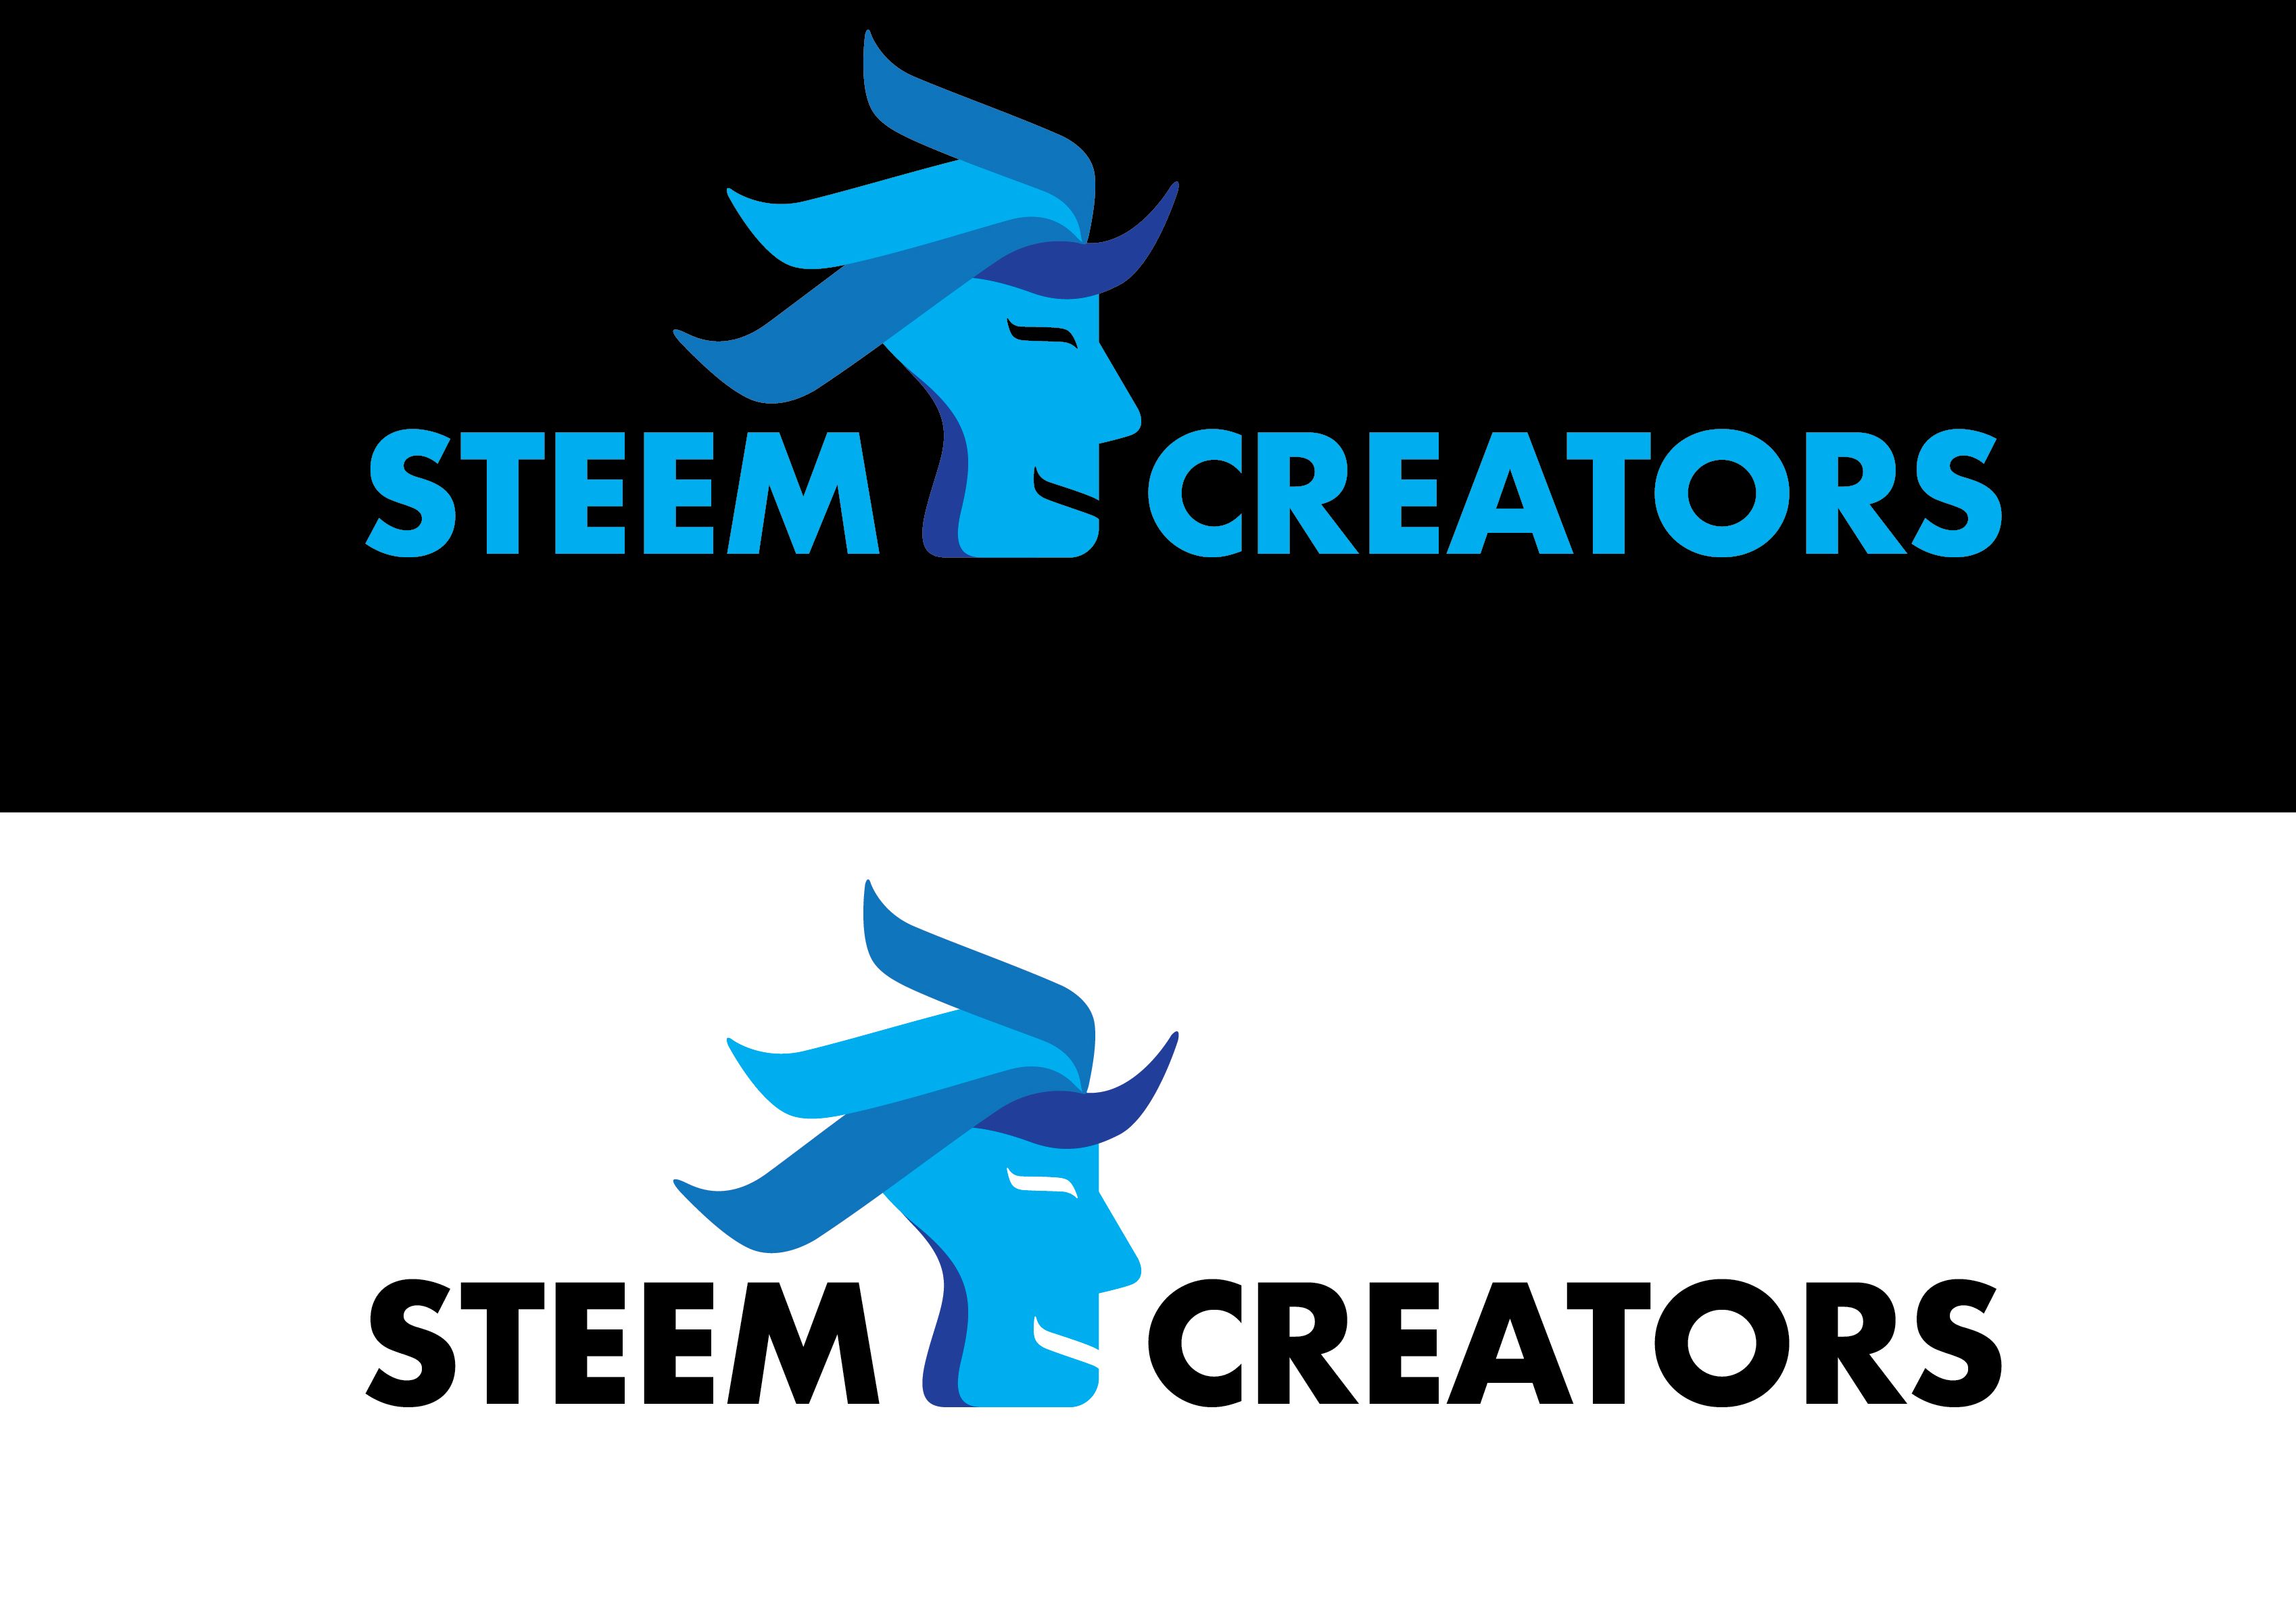 Steem Creators 03.jpg